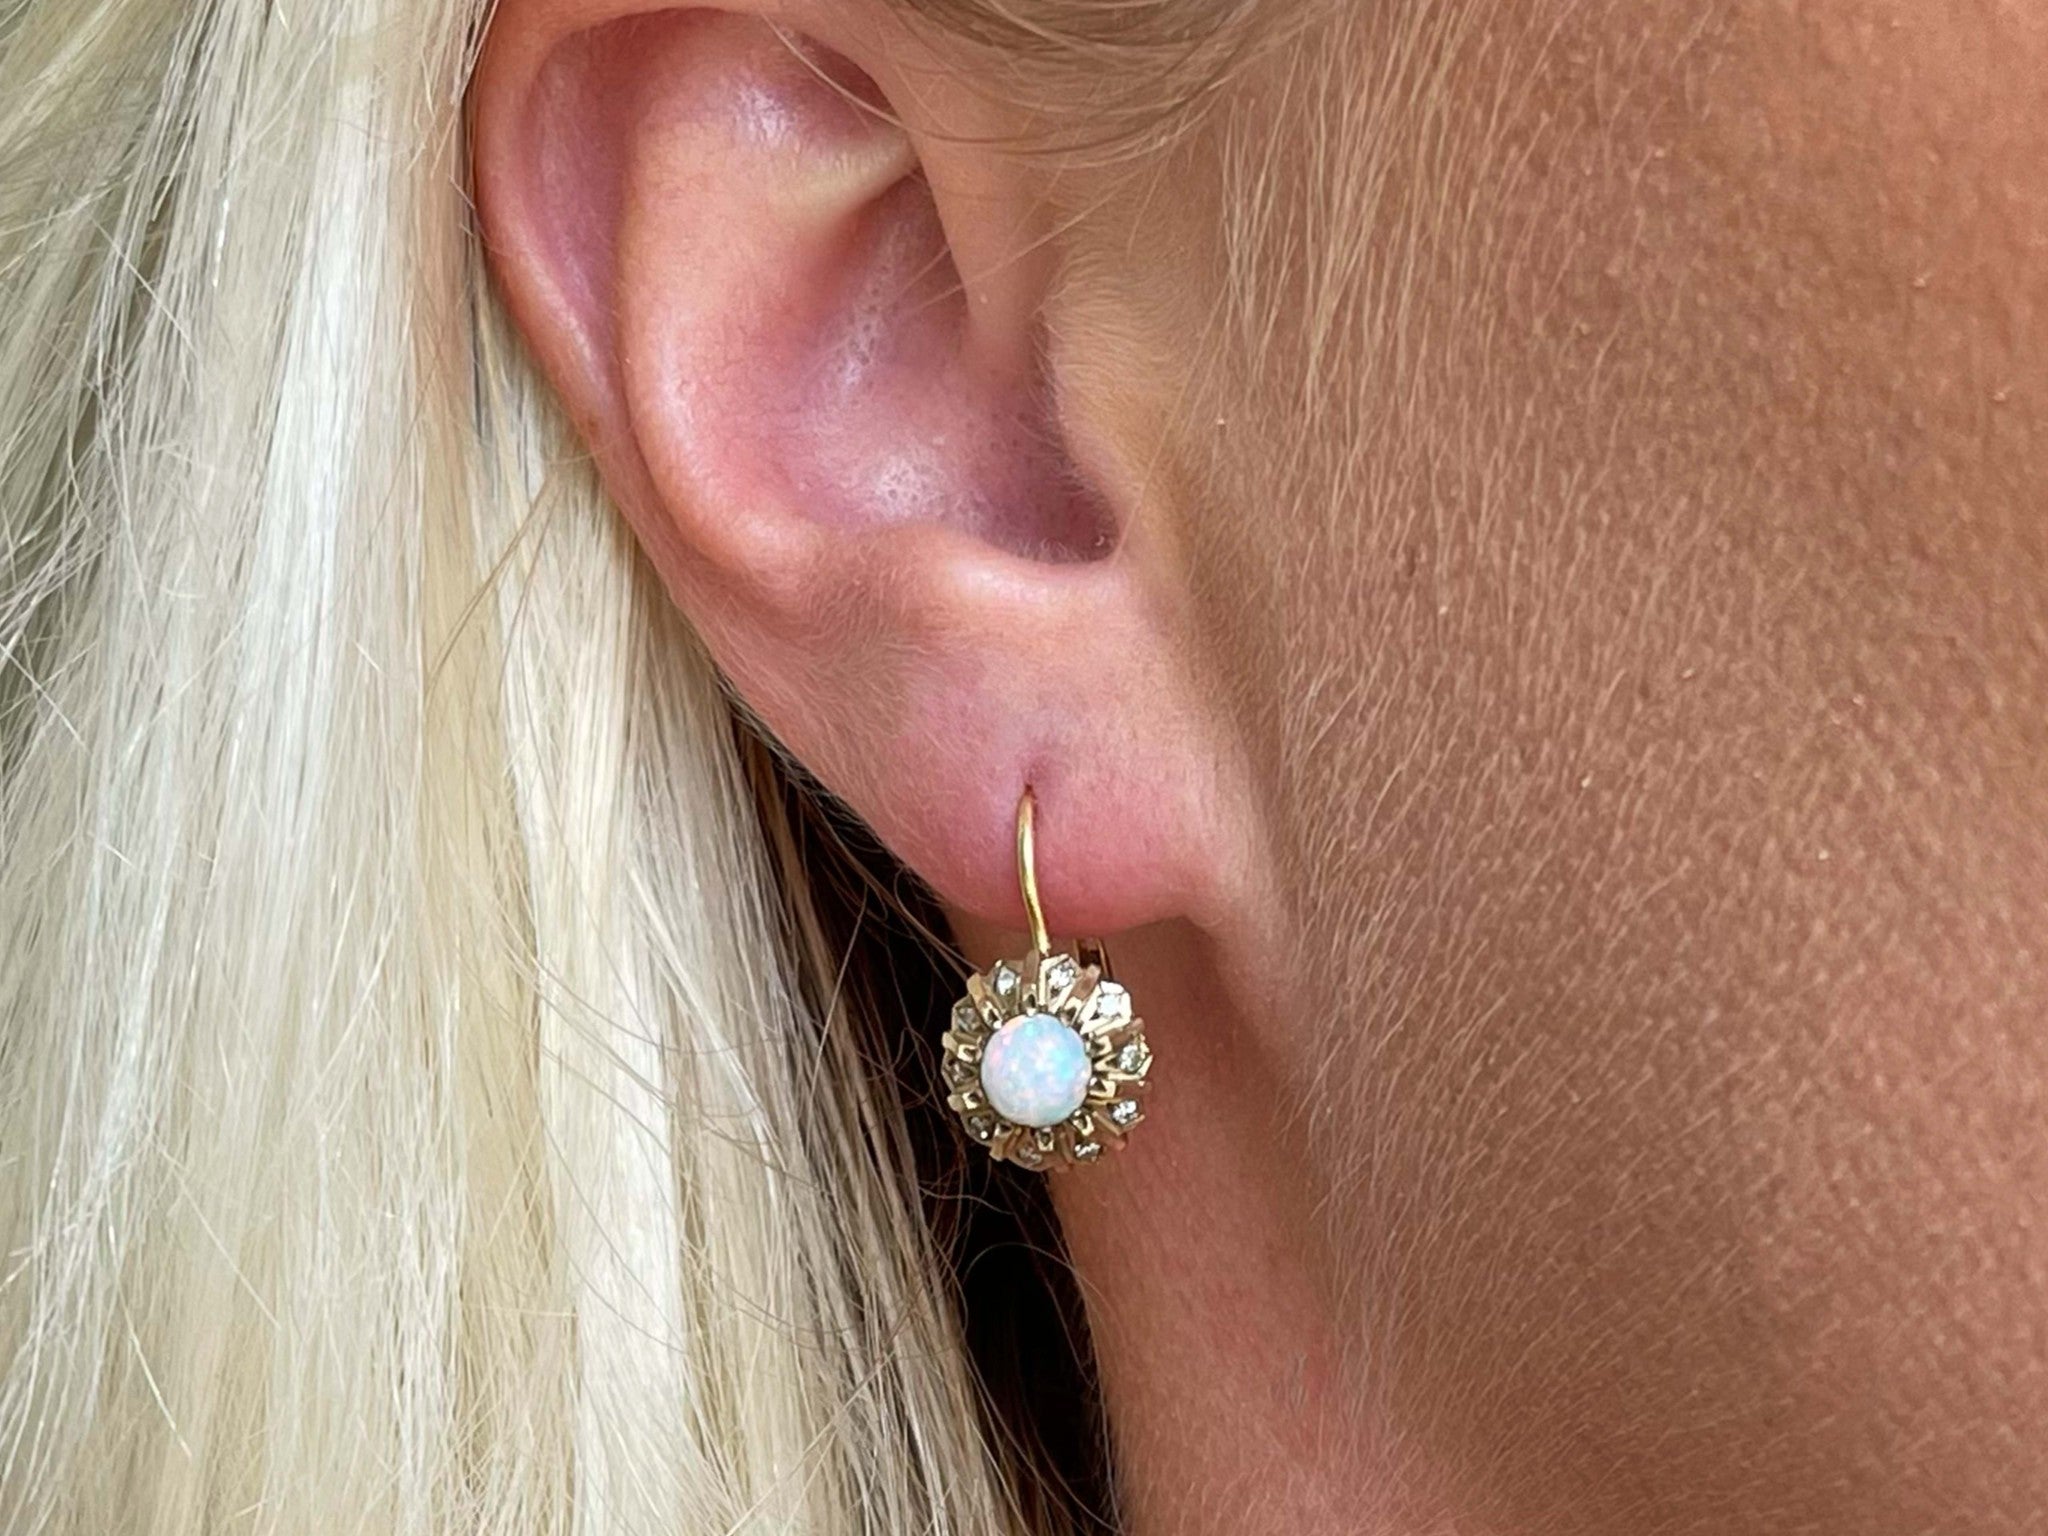 100 Year Old Antique Opal Diamond Earrings 14k Yellow Gold